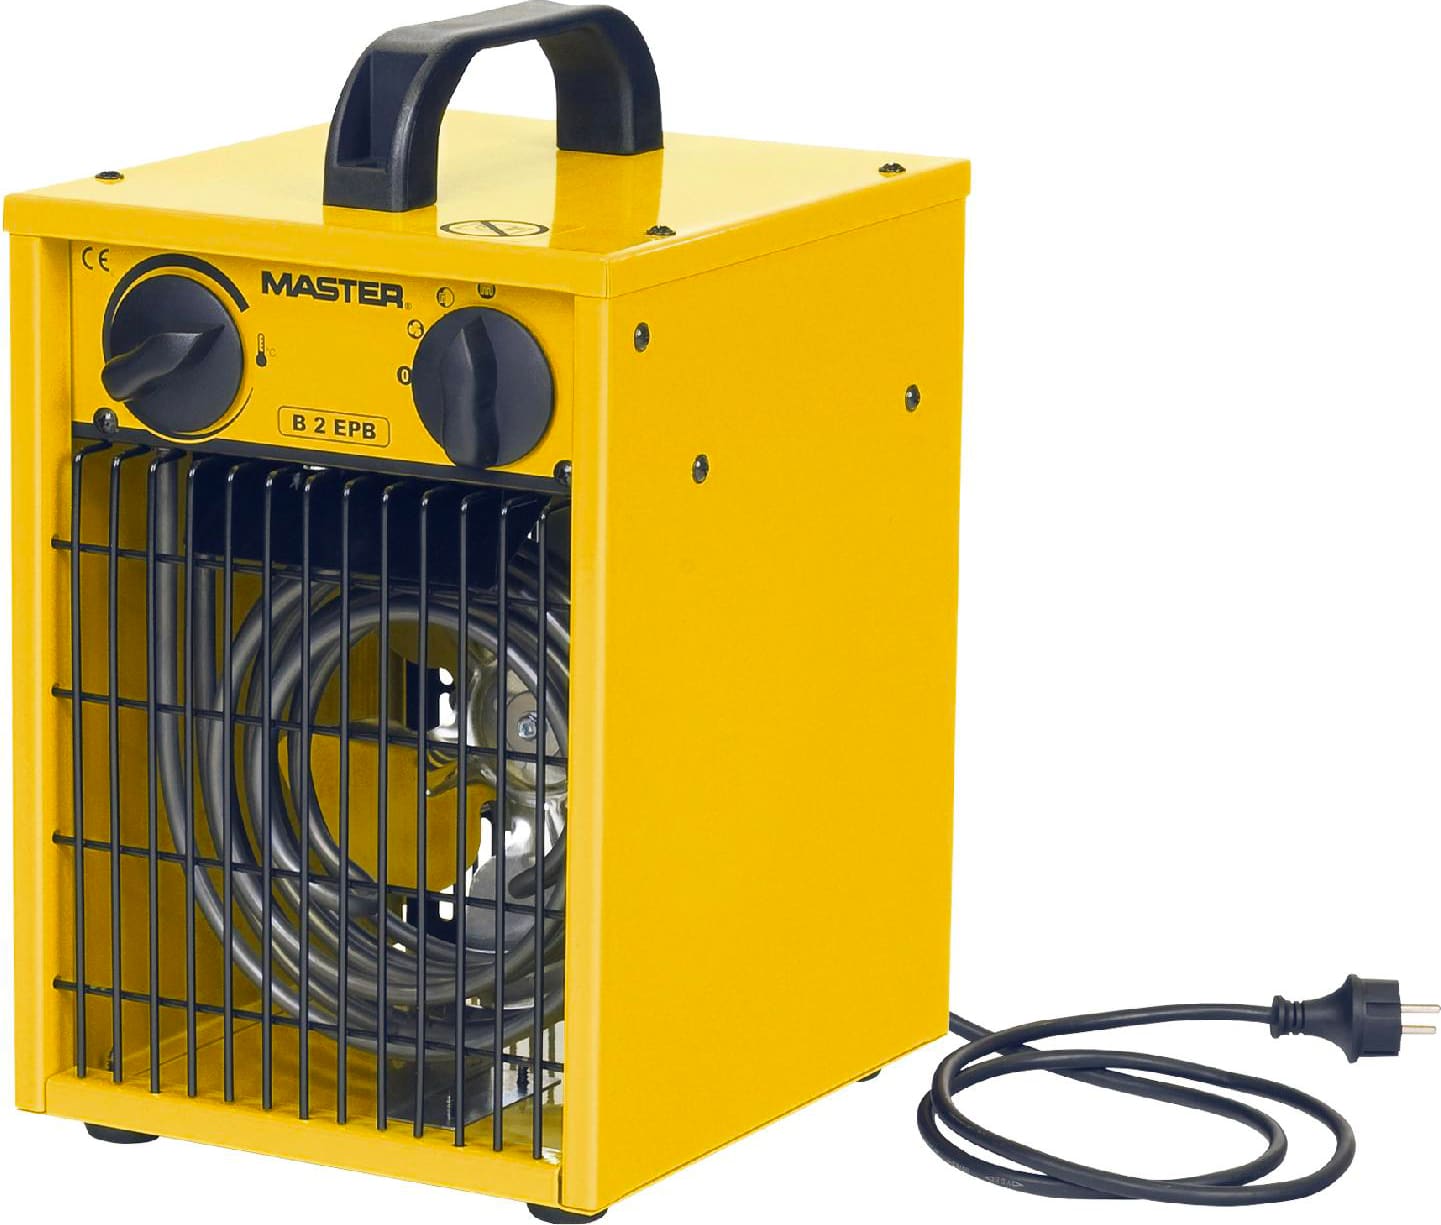 master b2 epb generatore di aria calda elettrico potenza termica 2 kw porata aria 184 m³/h - b2 epb